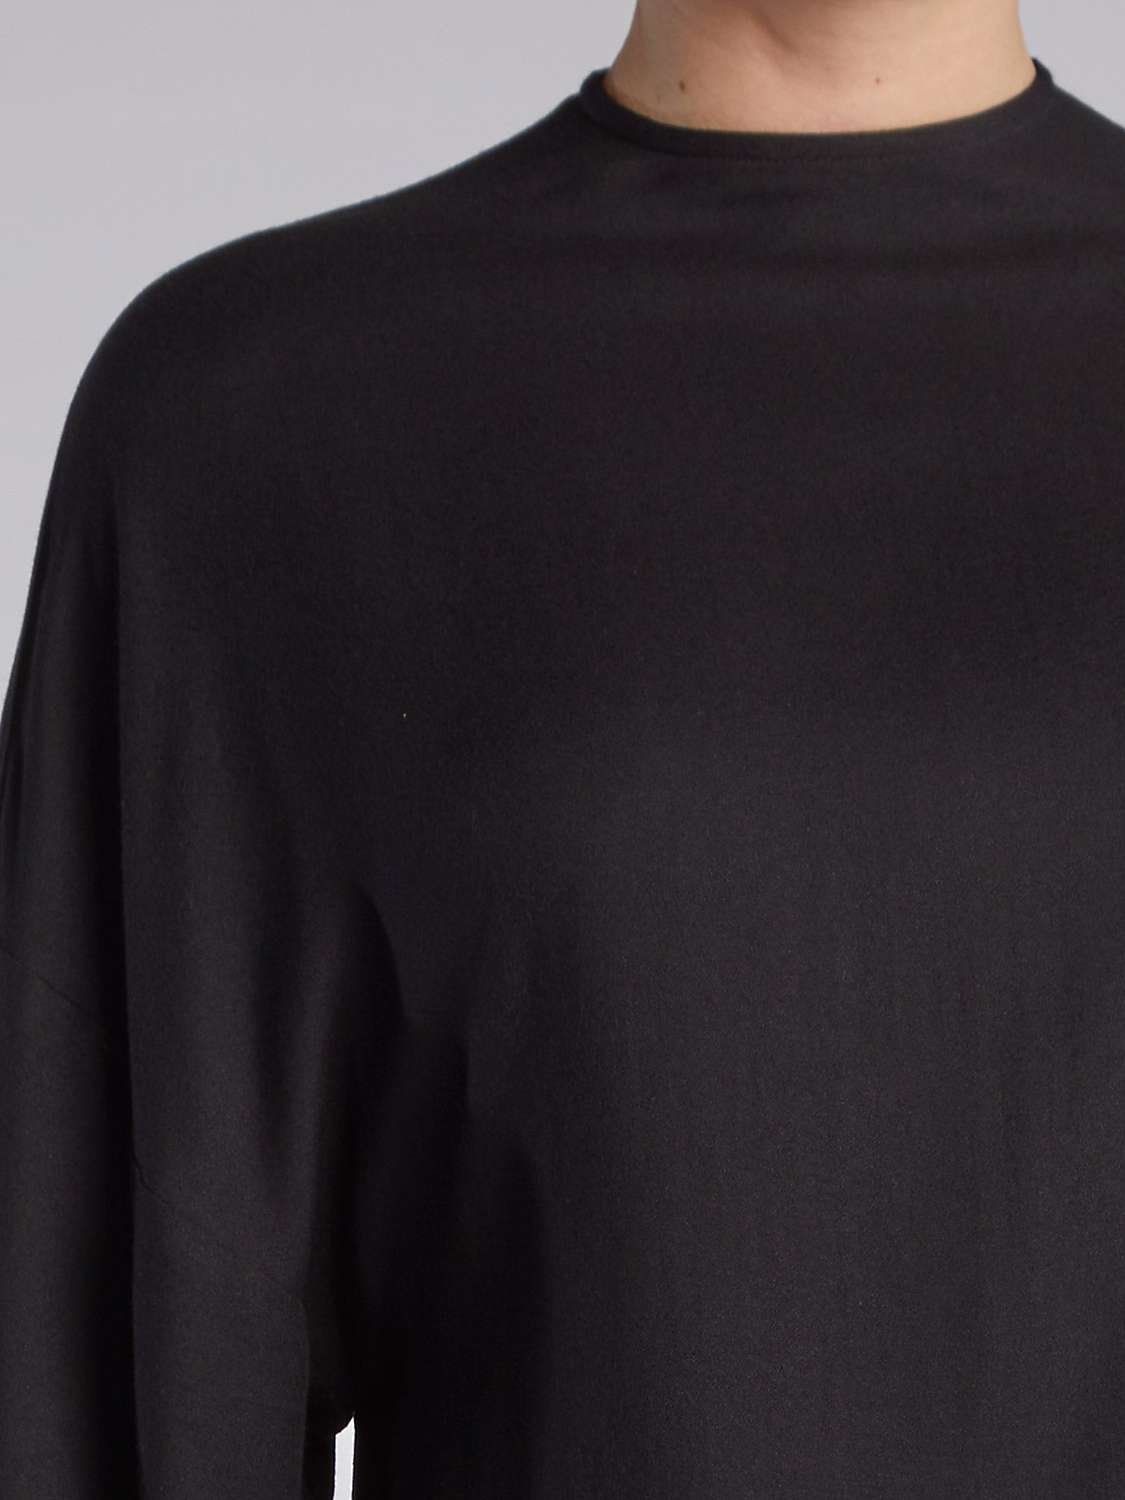 Buy Aab Dolmen Flared Sleeve Top, Black Online at johnlewis.com